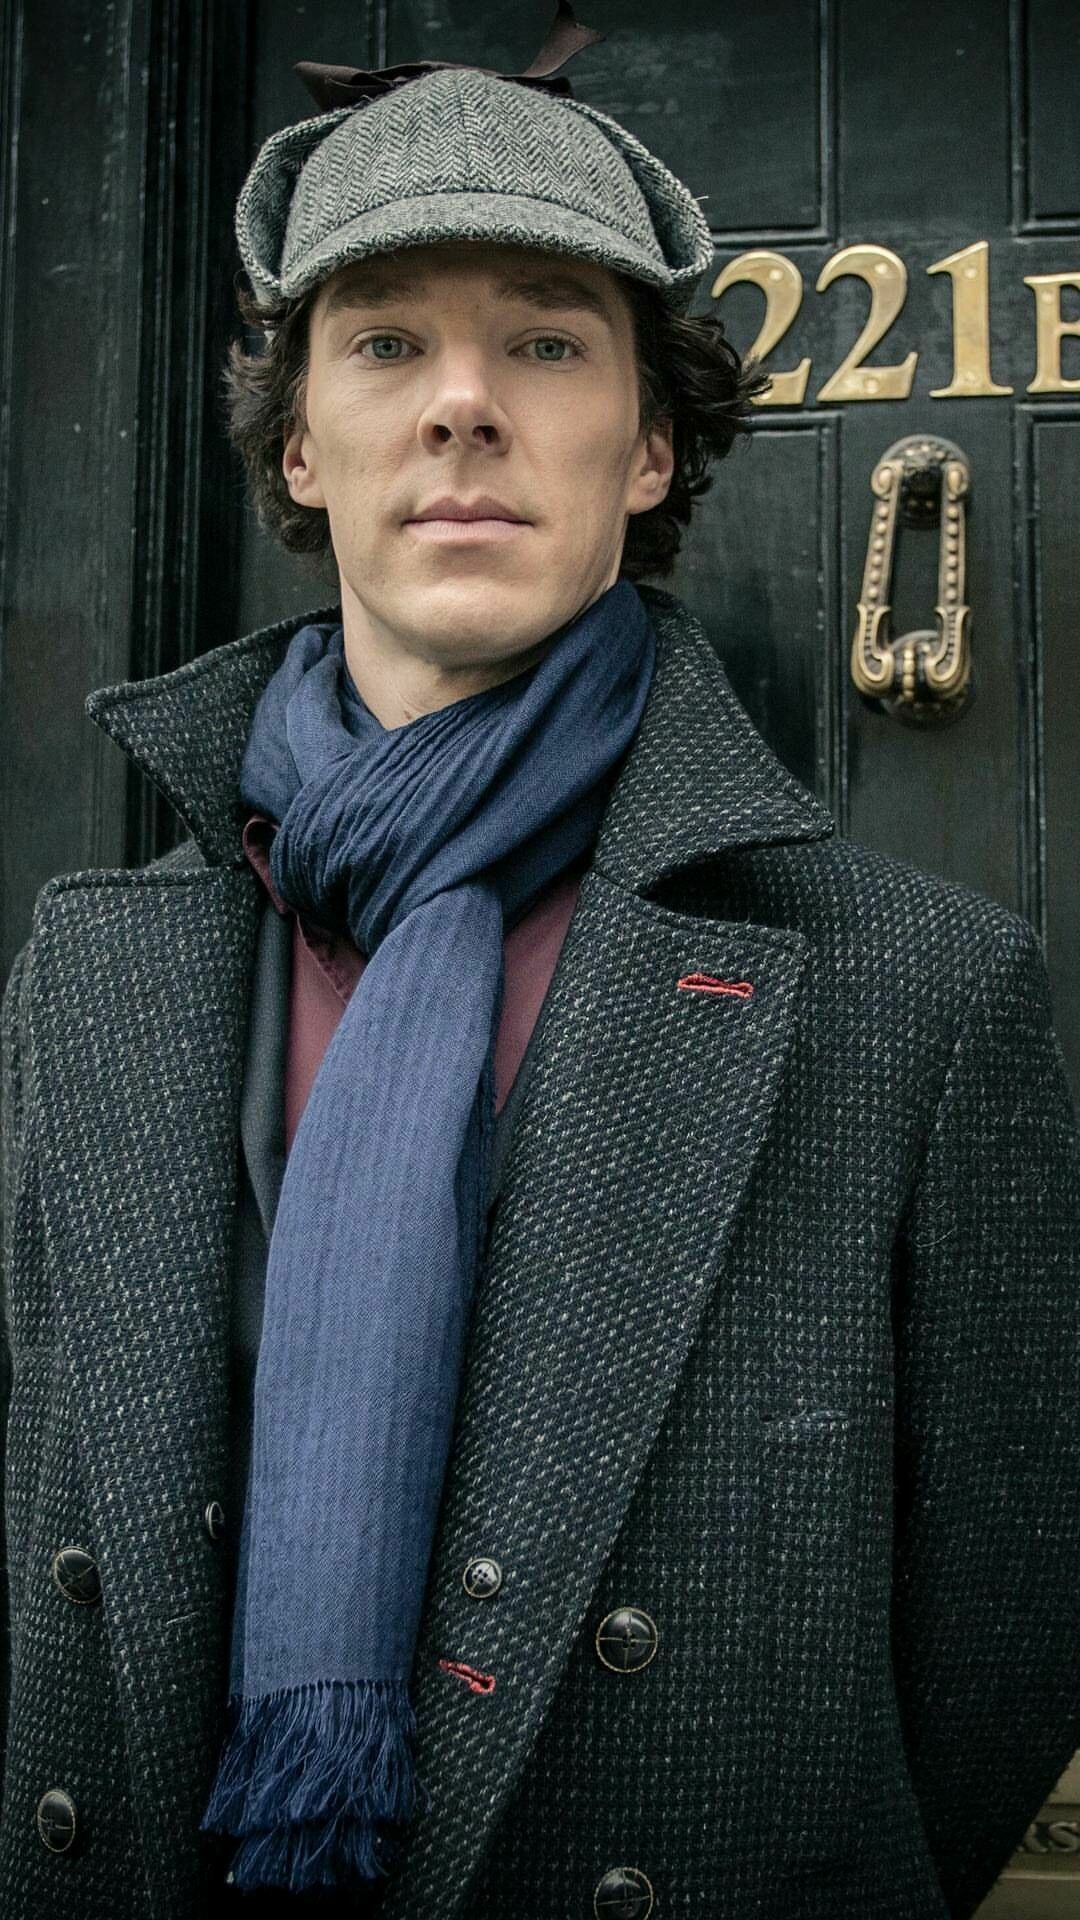 Sherlock (TV Series): 221b Baker Street, The BBC’s award-winning series. 1080x1920 Full HD Wallpaper.